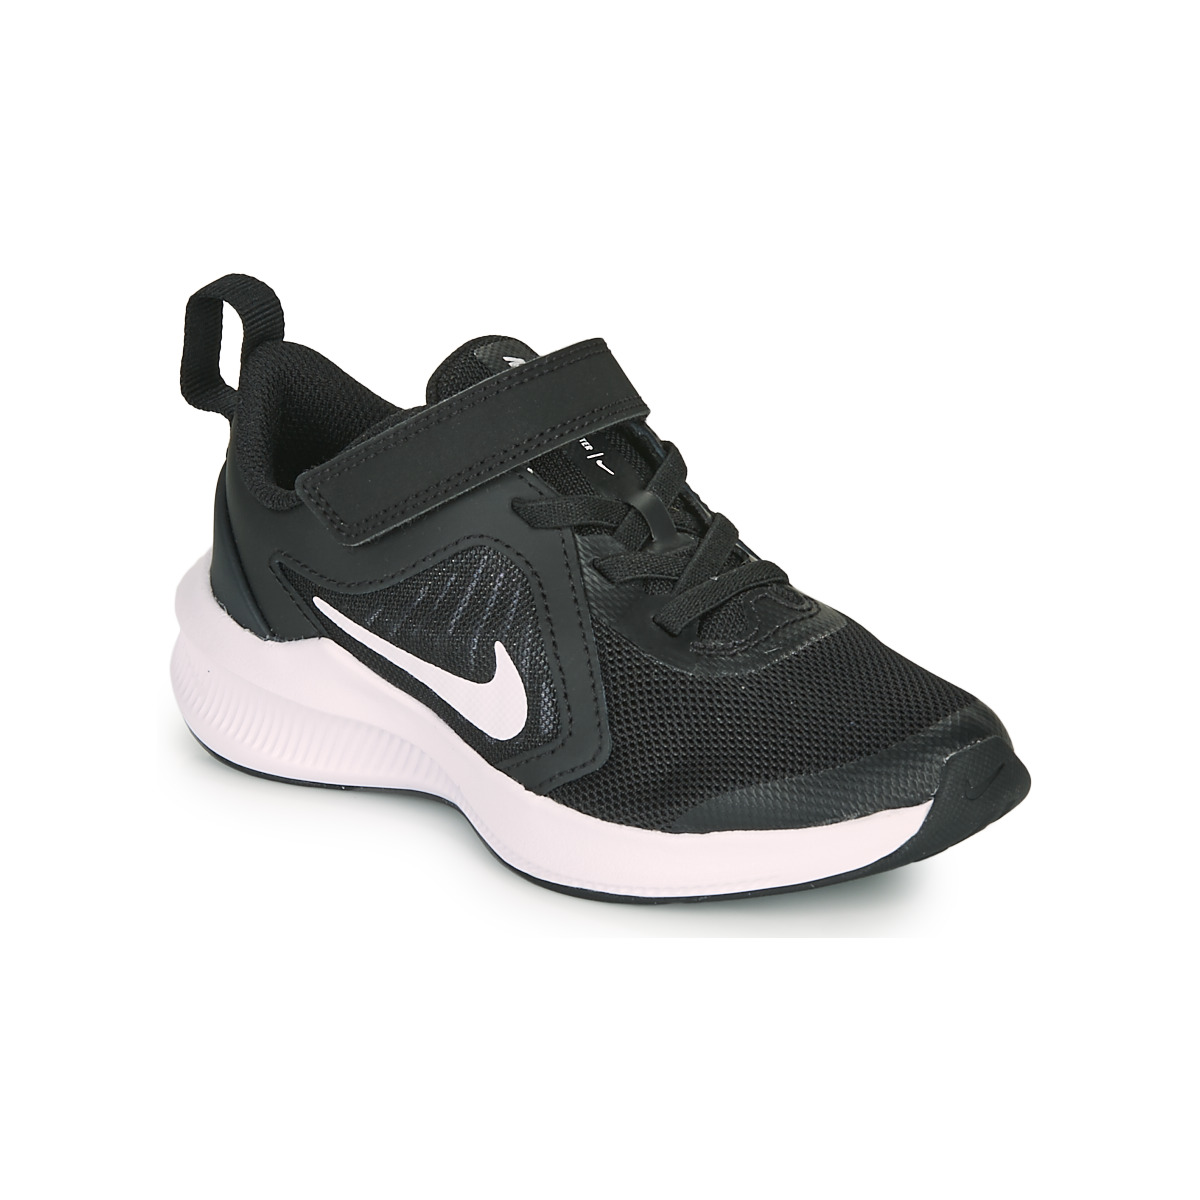 kengät Lapset Urheilukengät Nike DOWNSHIFTER 10 PS Musta / Valkoinen